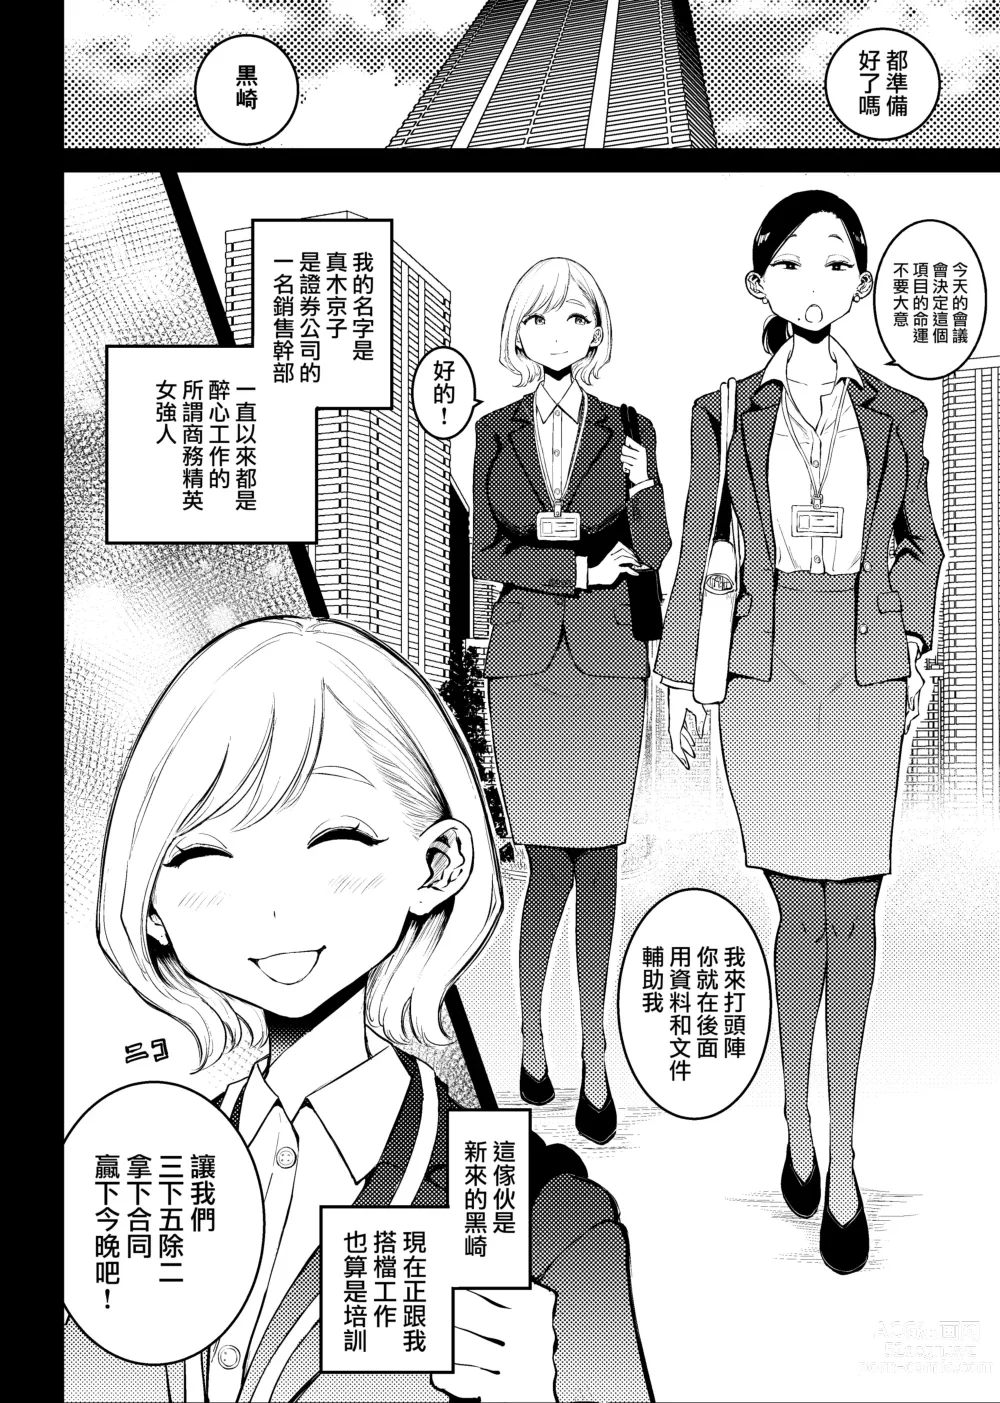 Page 3 of manga 後輩陷阱